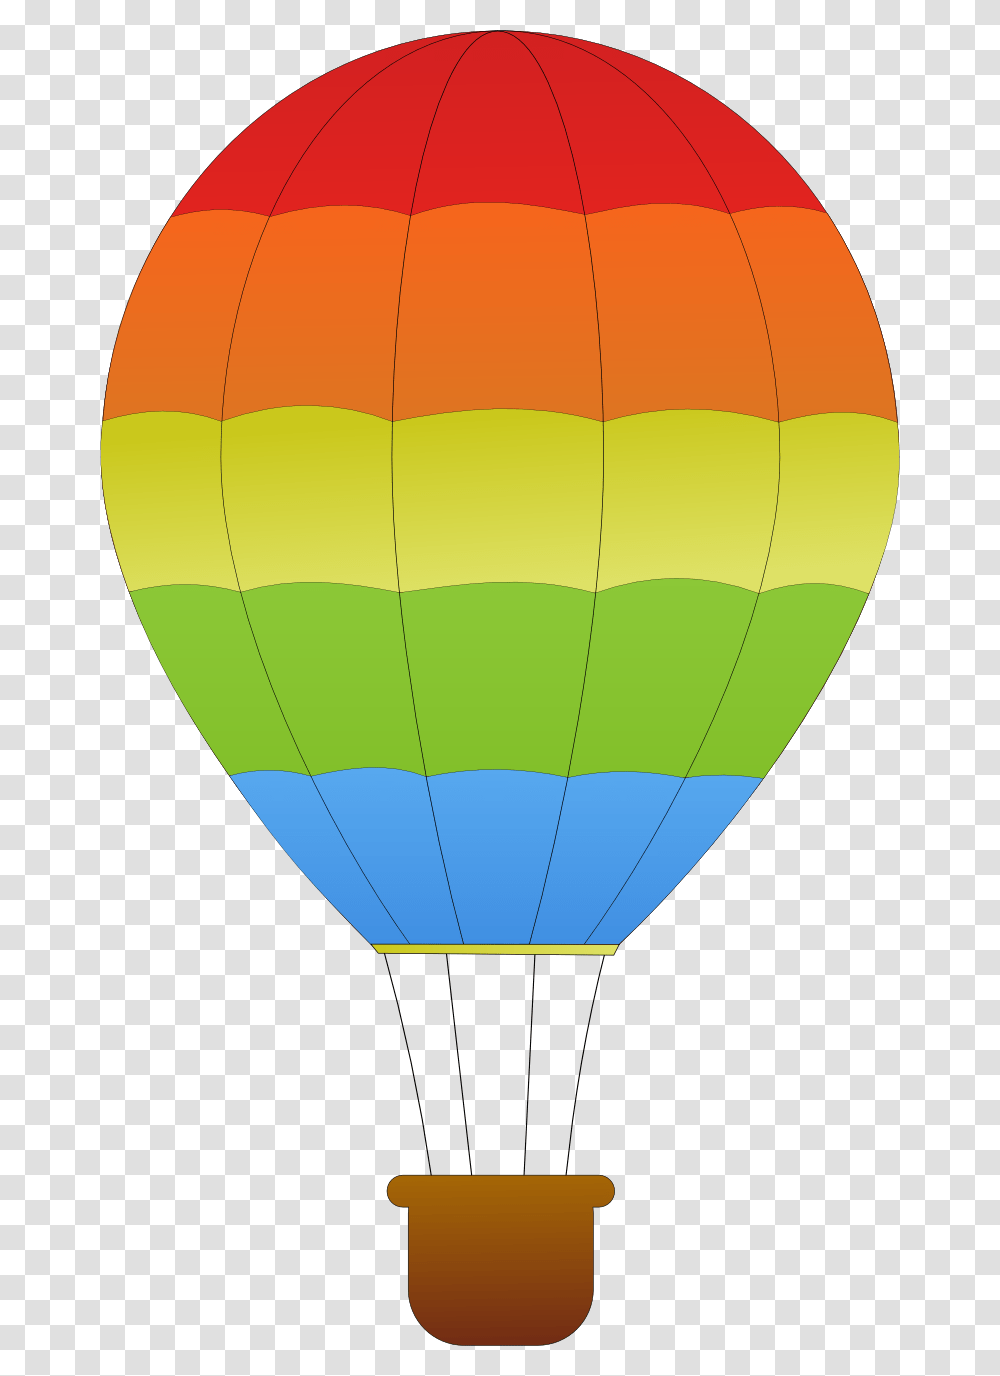 Free Of Air Balloon Icon Clipart Hot Air Balloon Basket, Aircraft, Vehicle, Transportation, Soccer Ball Transparent Png